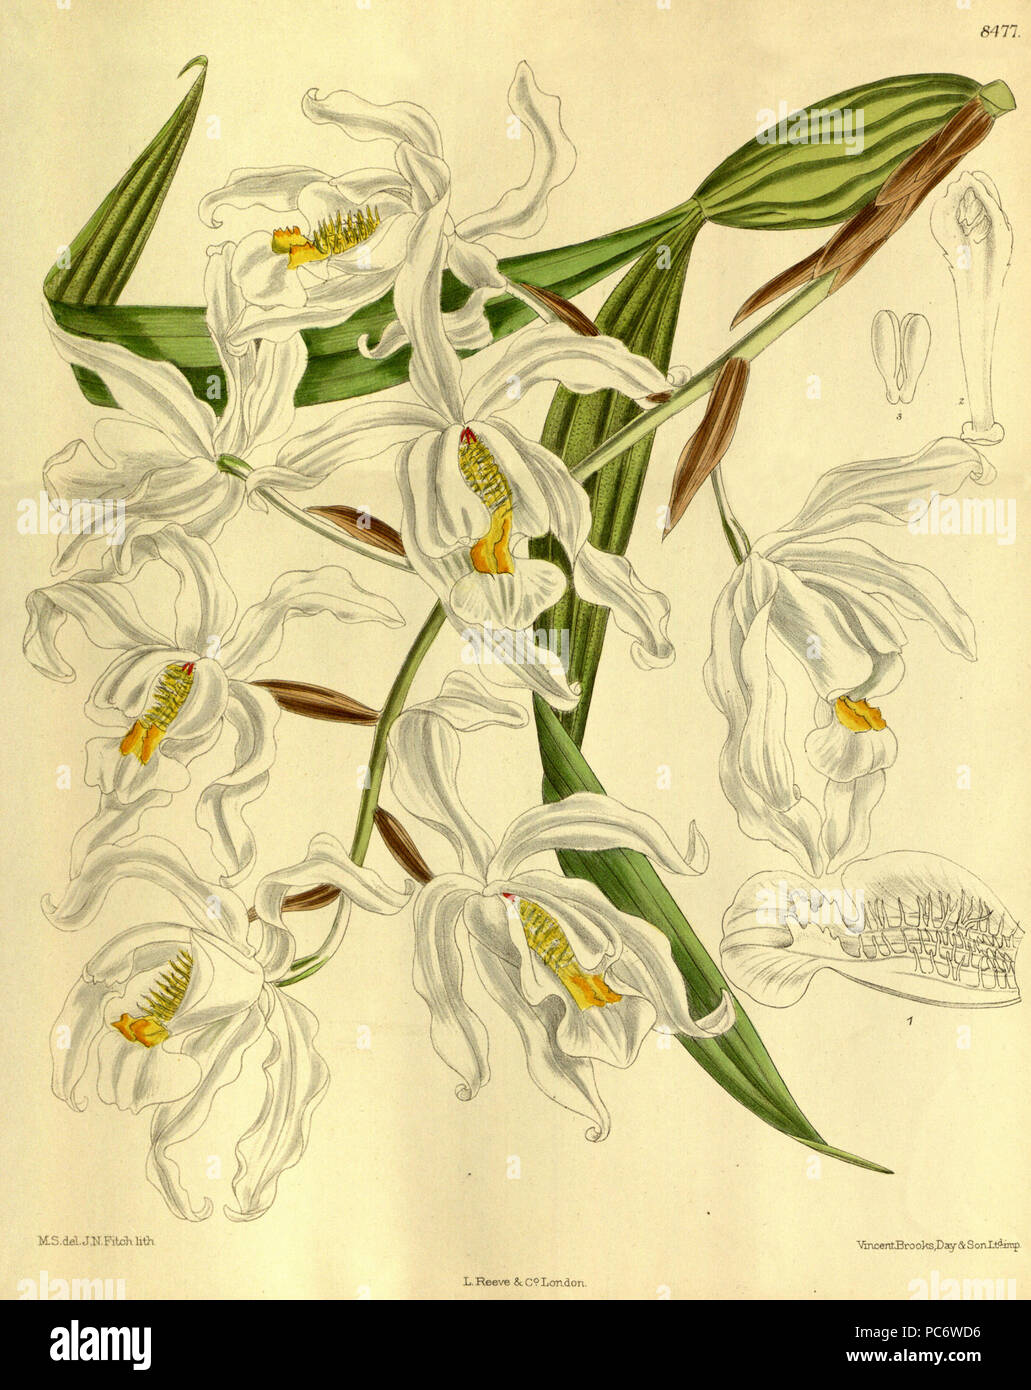 137 Coelogyne cristata - Curtis' 139 (Ser. 4 no. 9) pl. 8477 (1913) Stock Photo